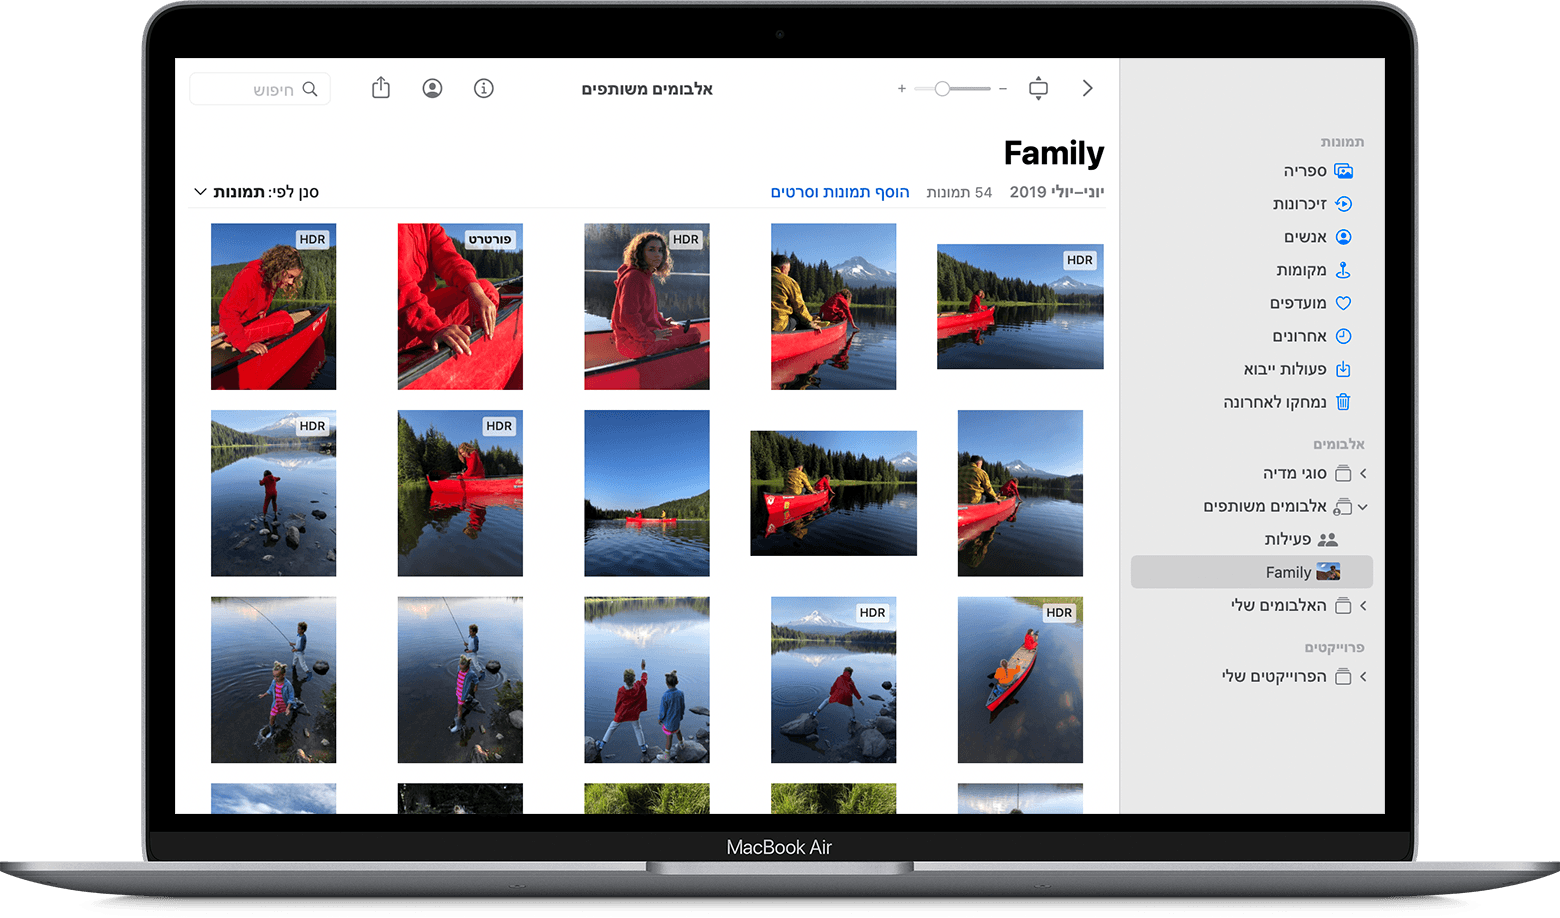 MacBook Air עם היישום 'תמונות' המציג אלבום משפחתי משותף